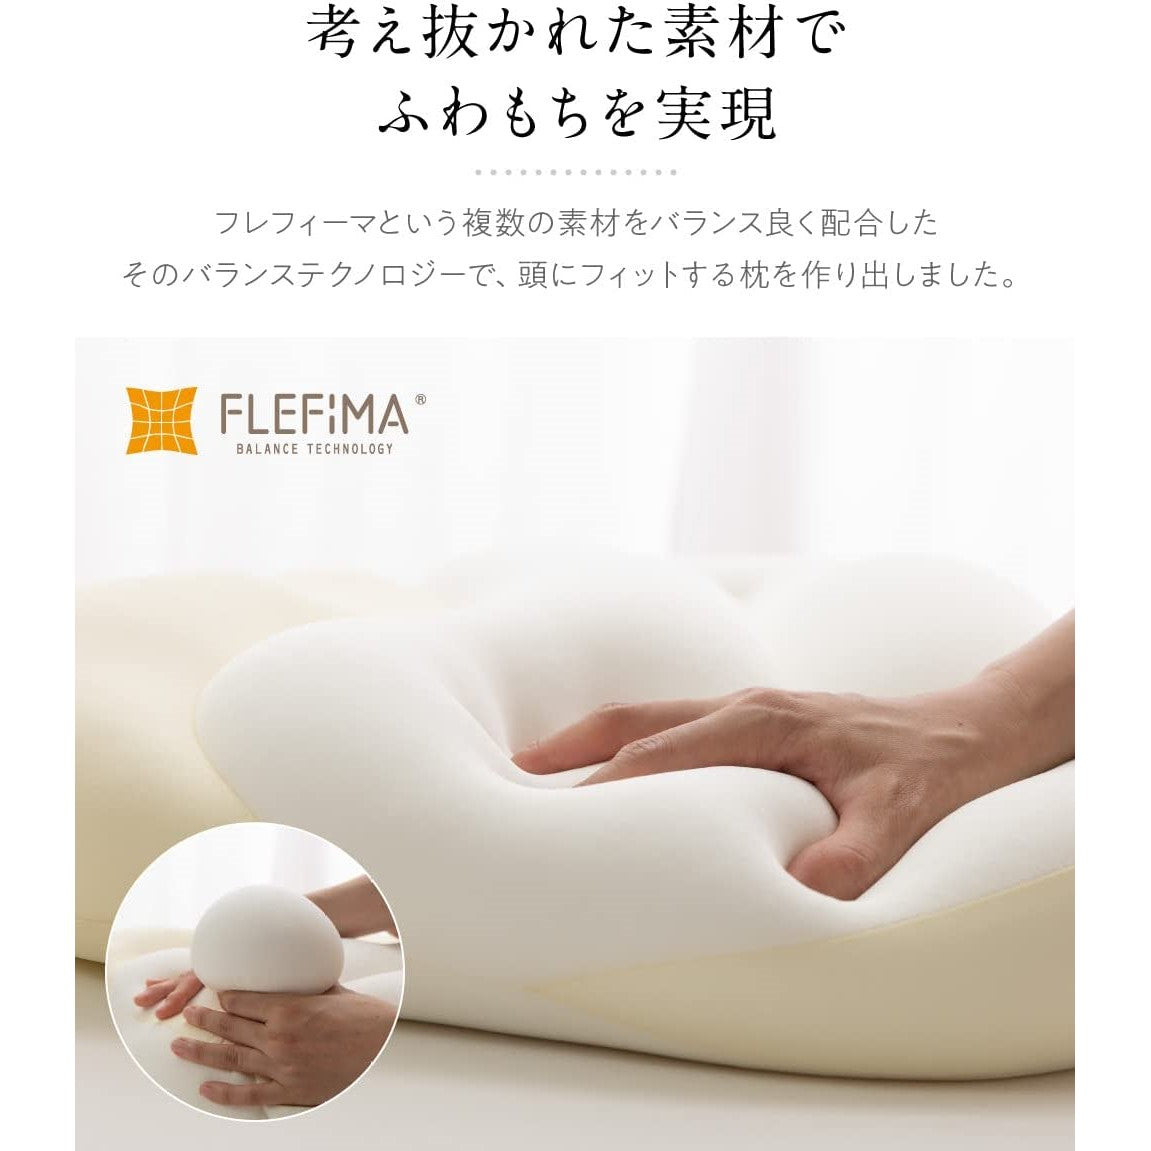 Polyurethane Foam Pillow (Made in Japan)